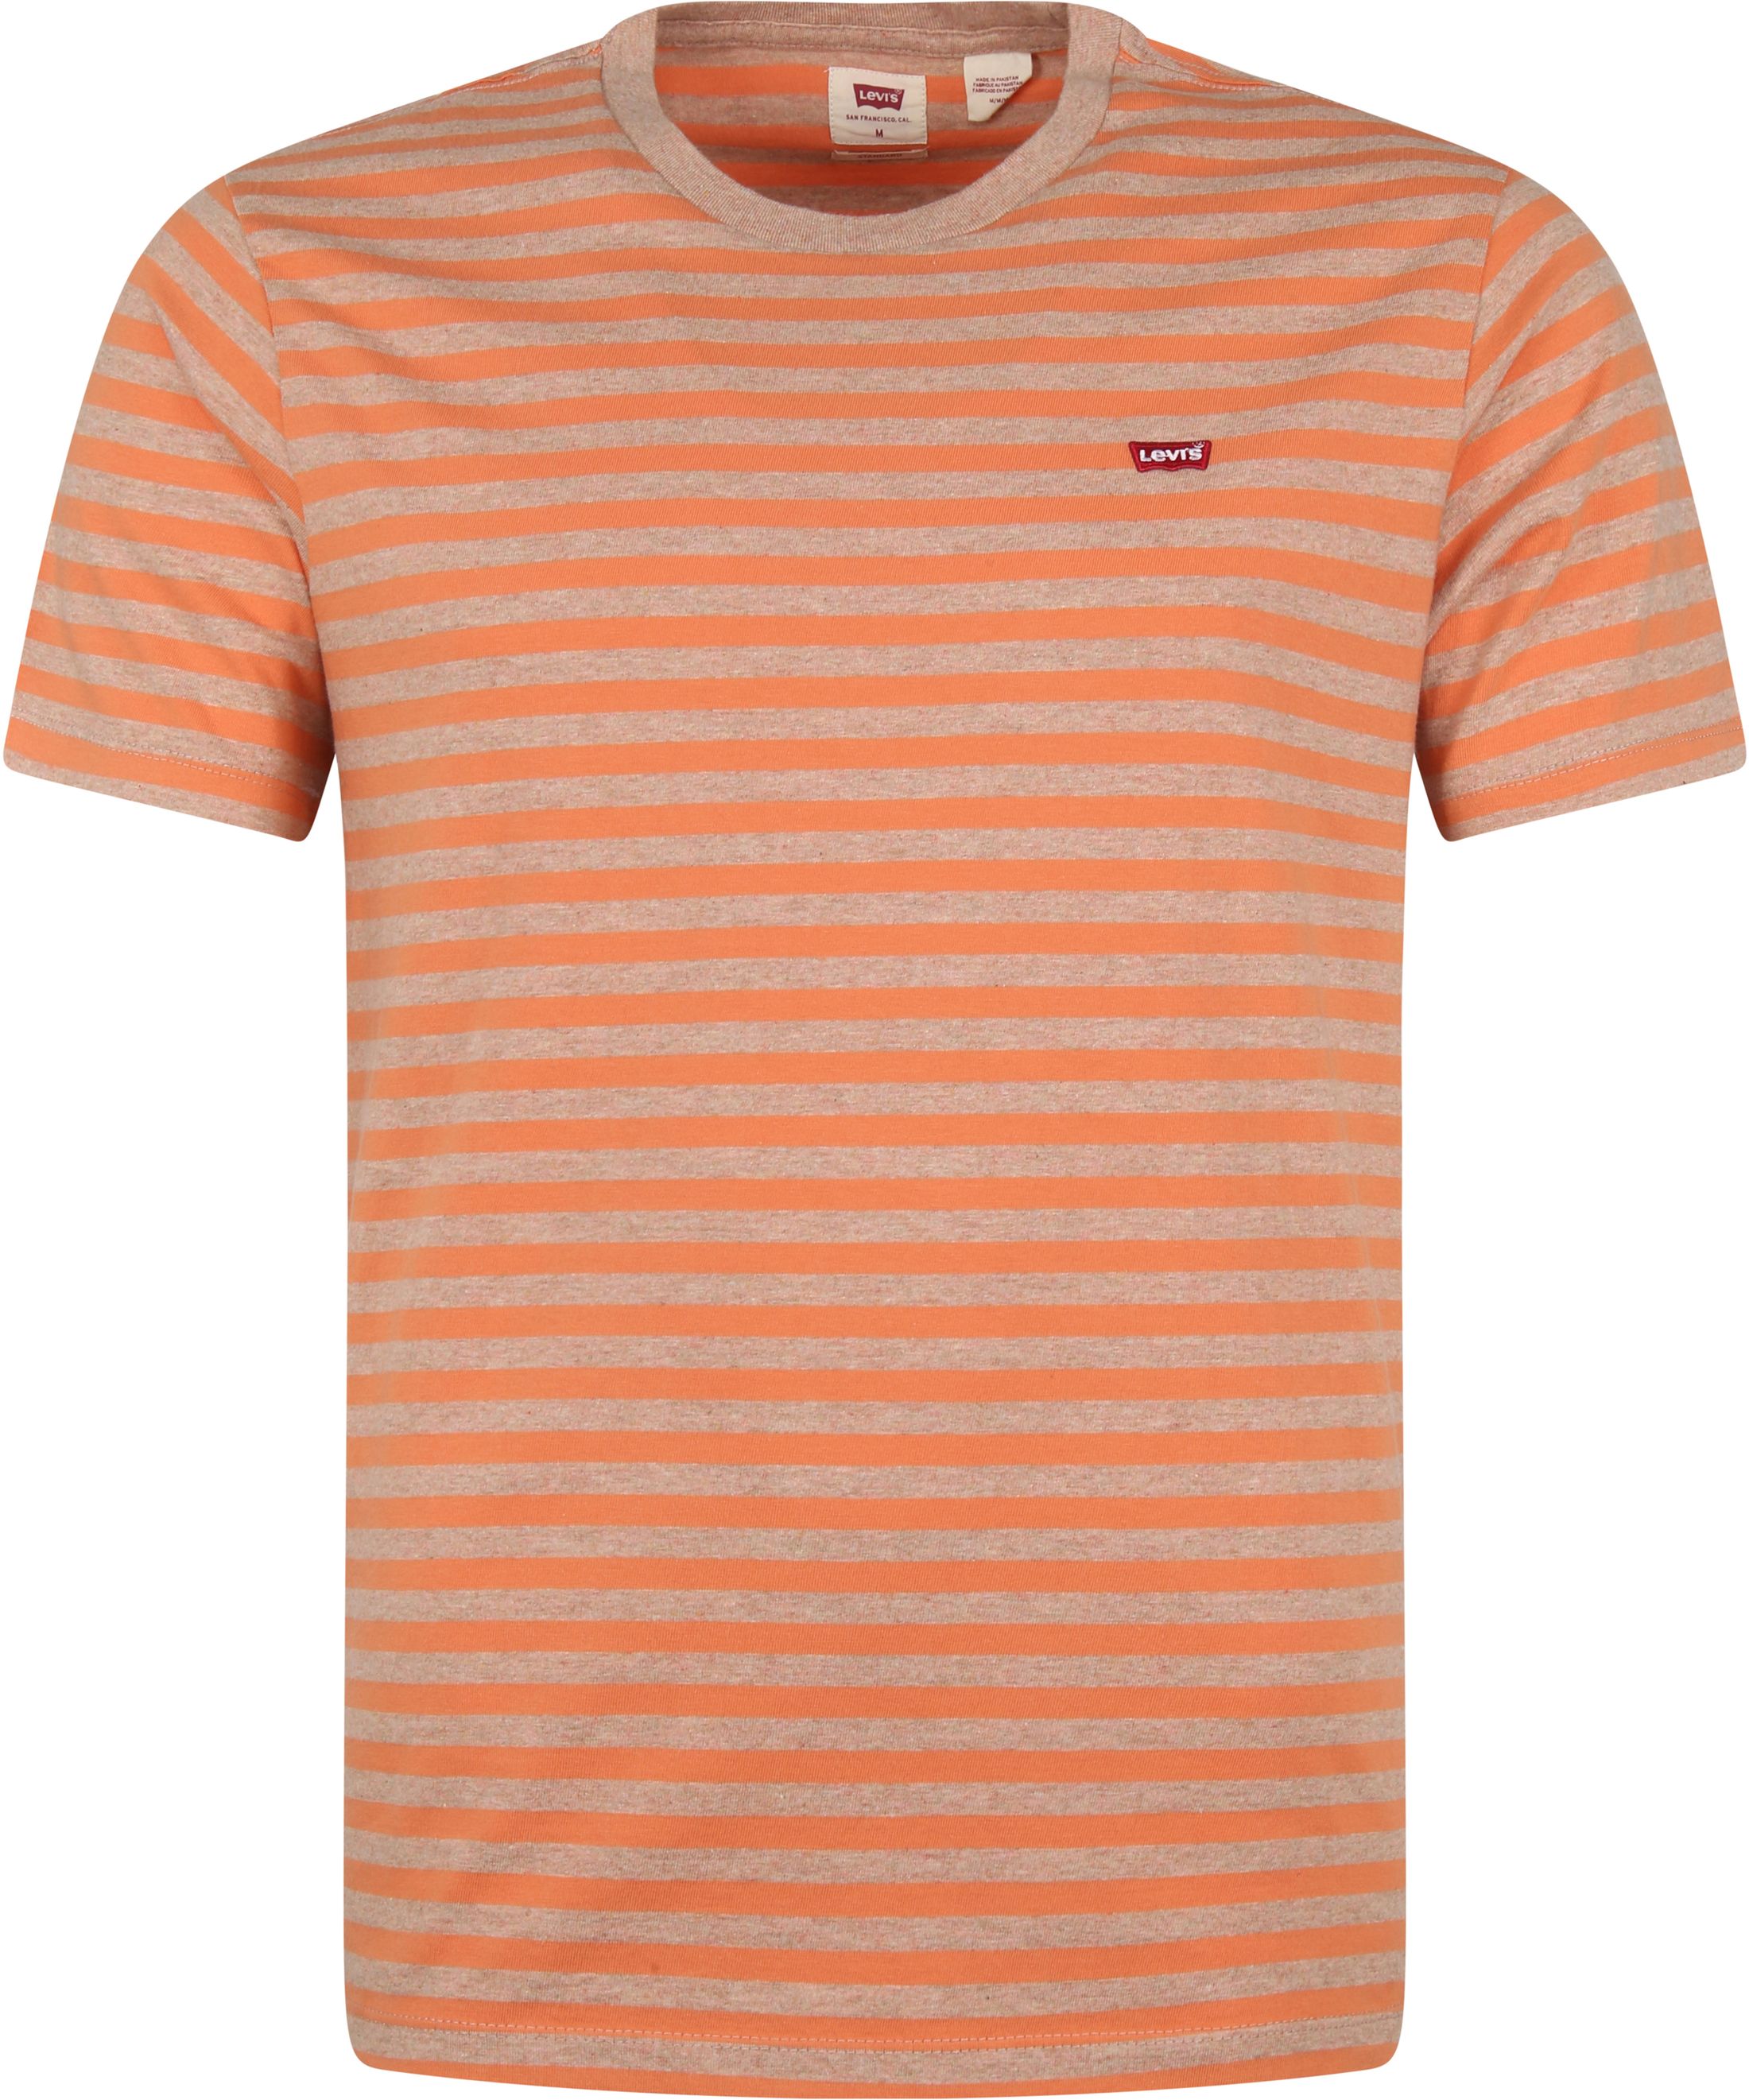 Levi's T Shirt Original Stripes Orange size M